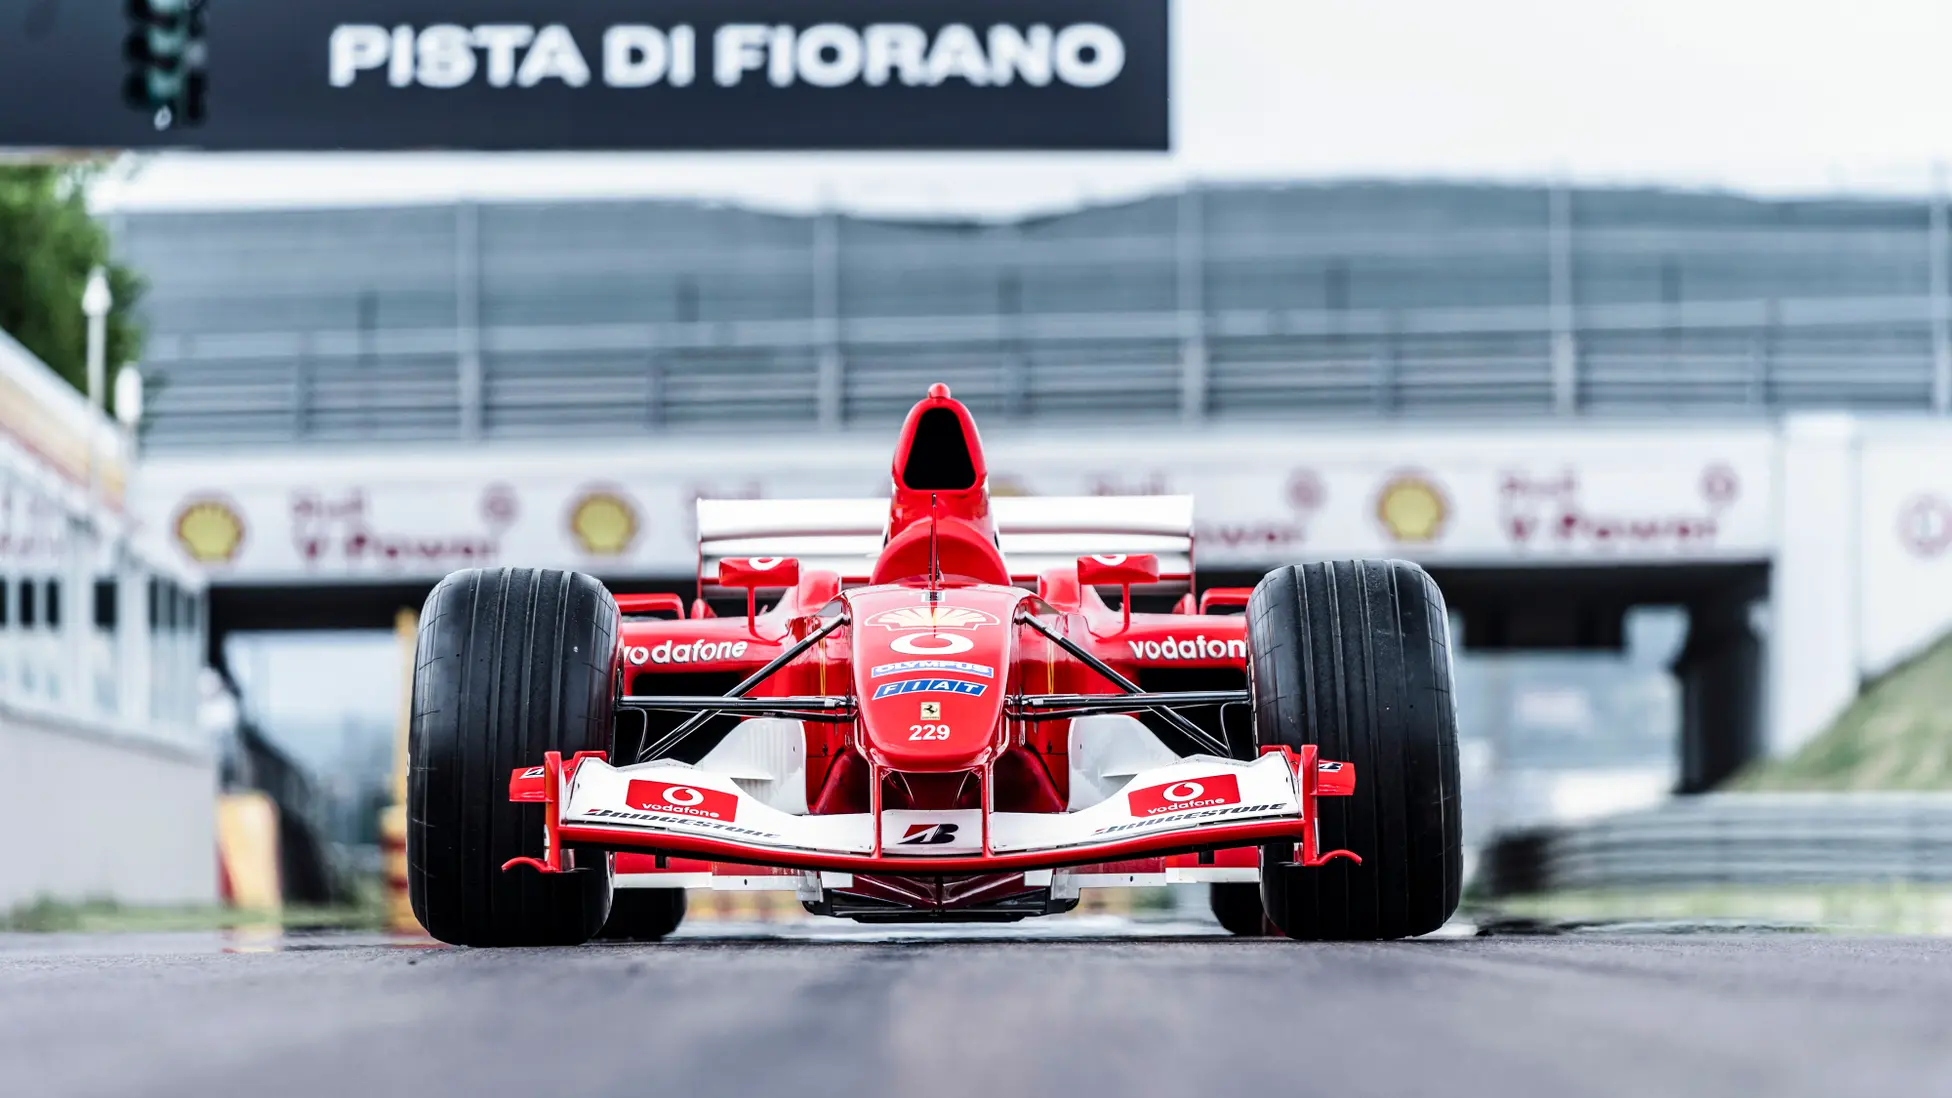 Michael Schumacher Ferrari F2003 F1 car